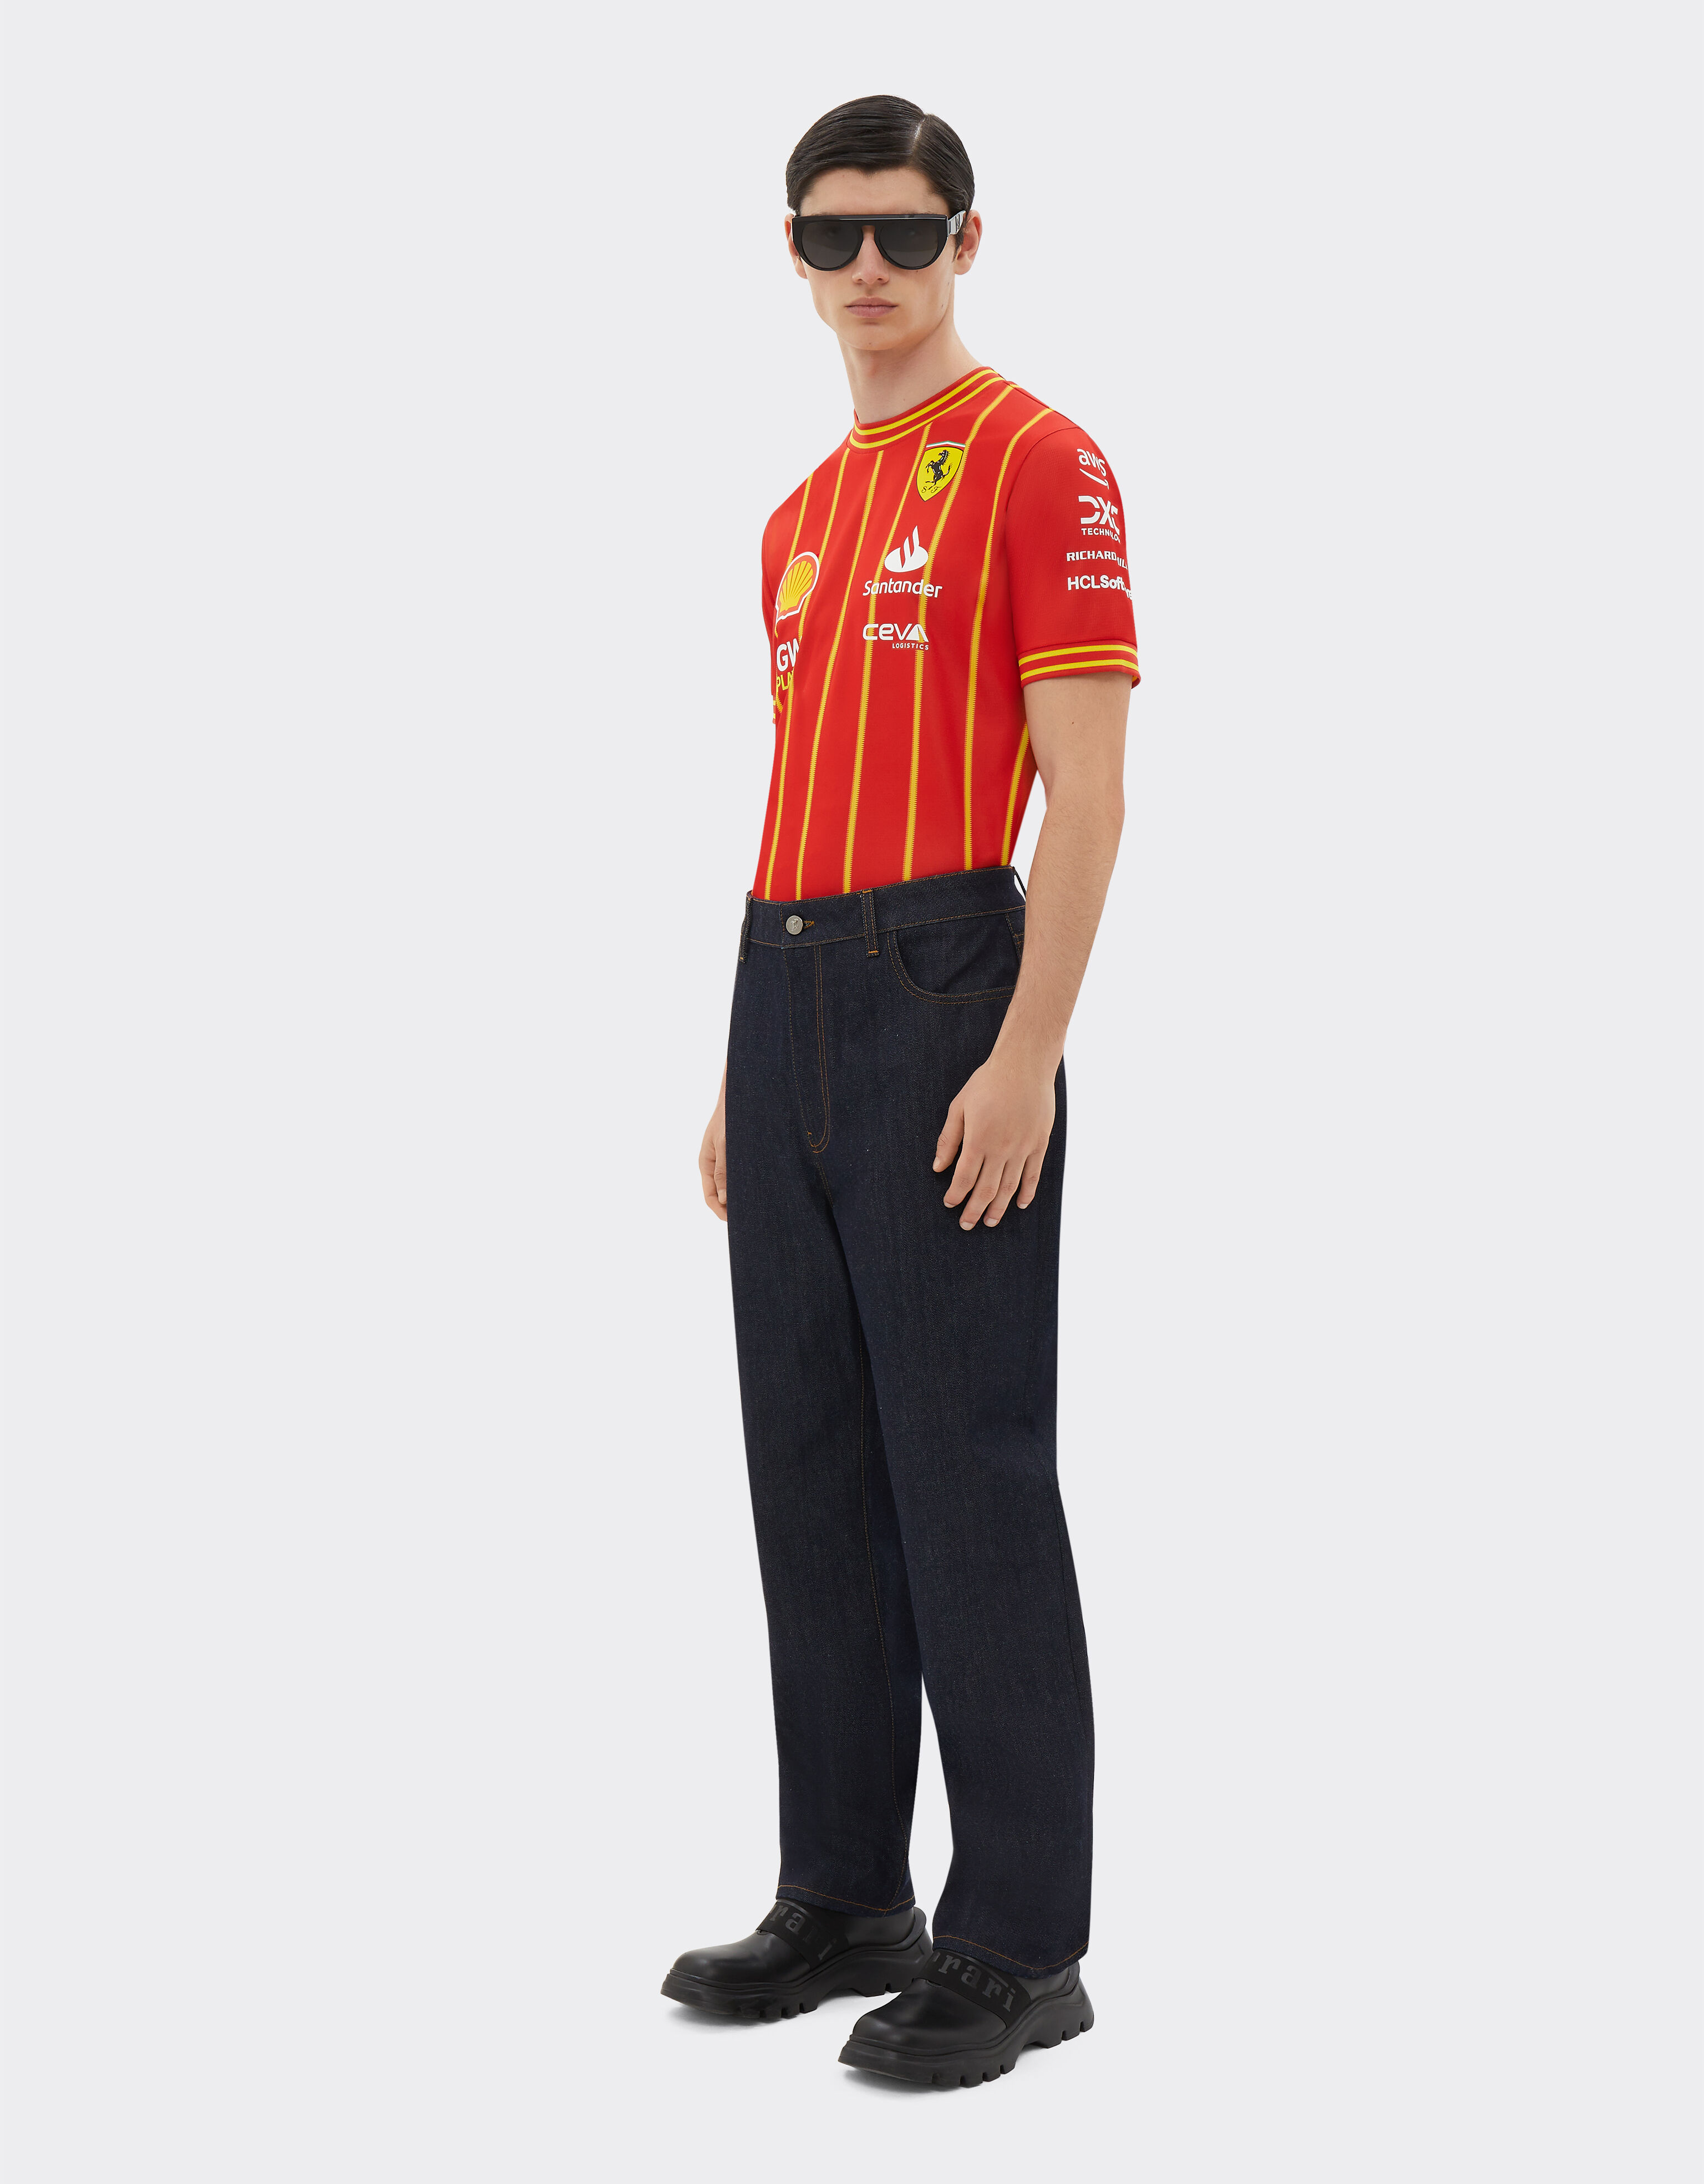 Ferrari Camiseta de fútbol Puma Leclerc para Scuderia Ferrari - Edición especial Austria Rosso Corsa F1338f